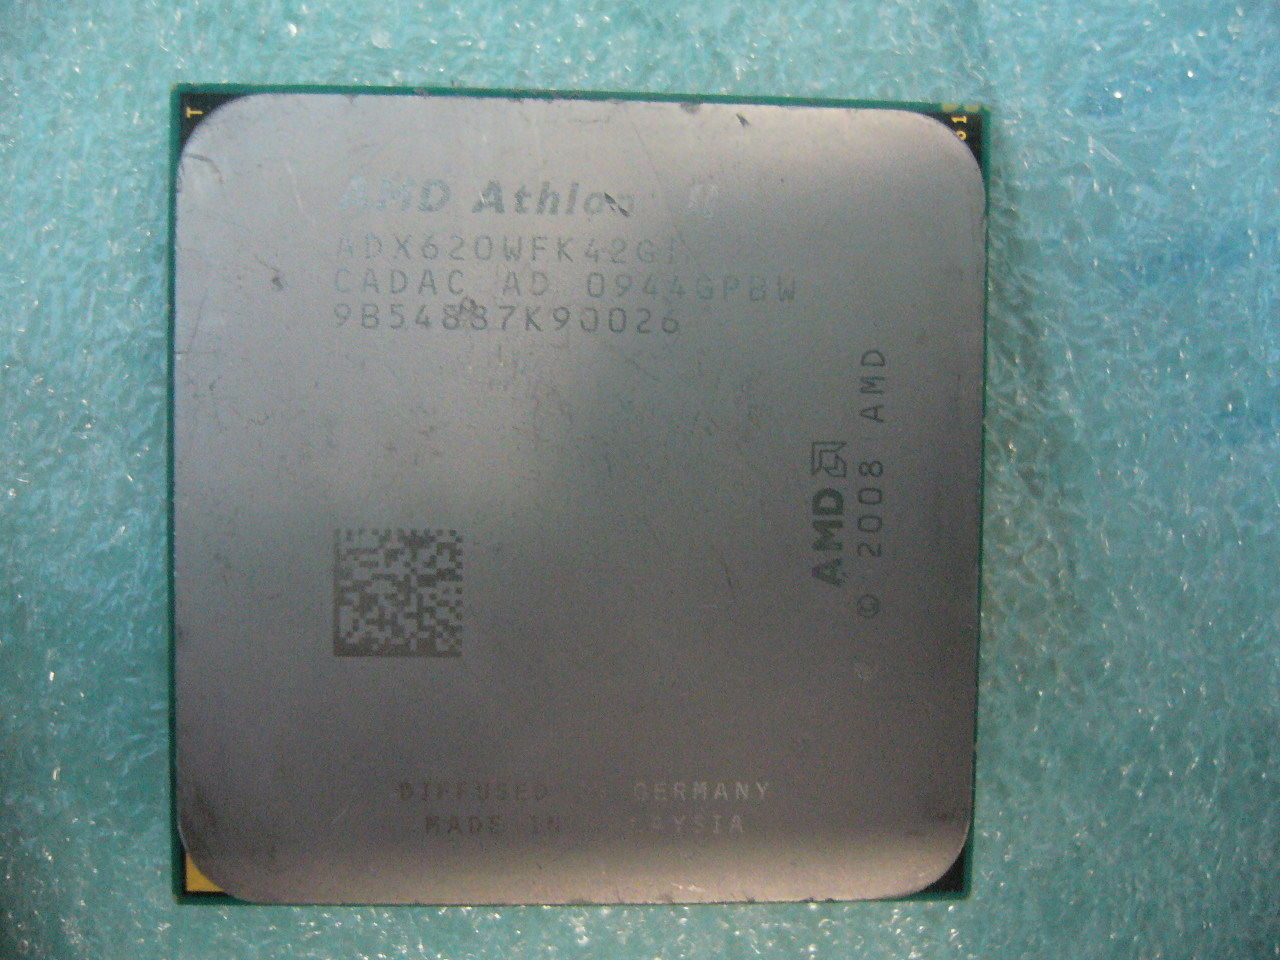 QTY 1x AMD Athlon II X4 620 2.6 GHz Quad-Core (ADX620WFK42GI CPU AM3 938-Pin - Click Image to Close